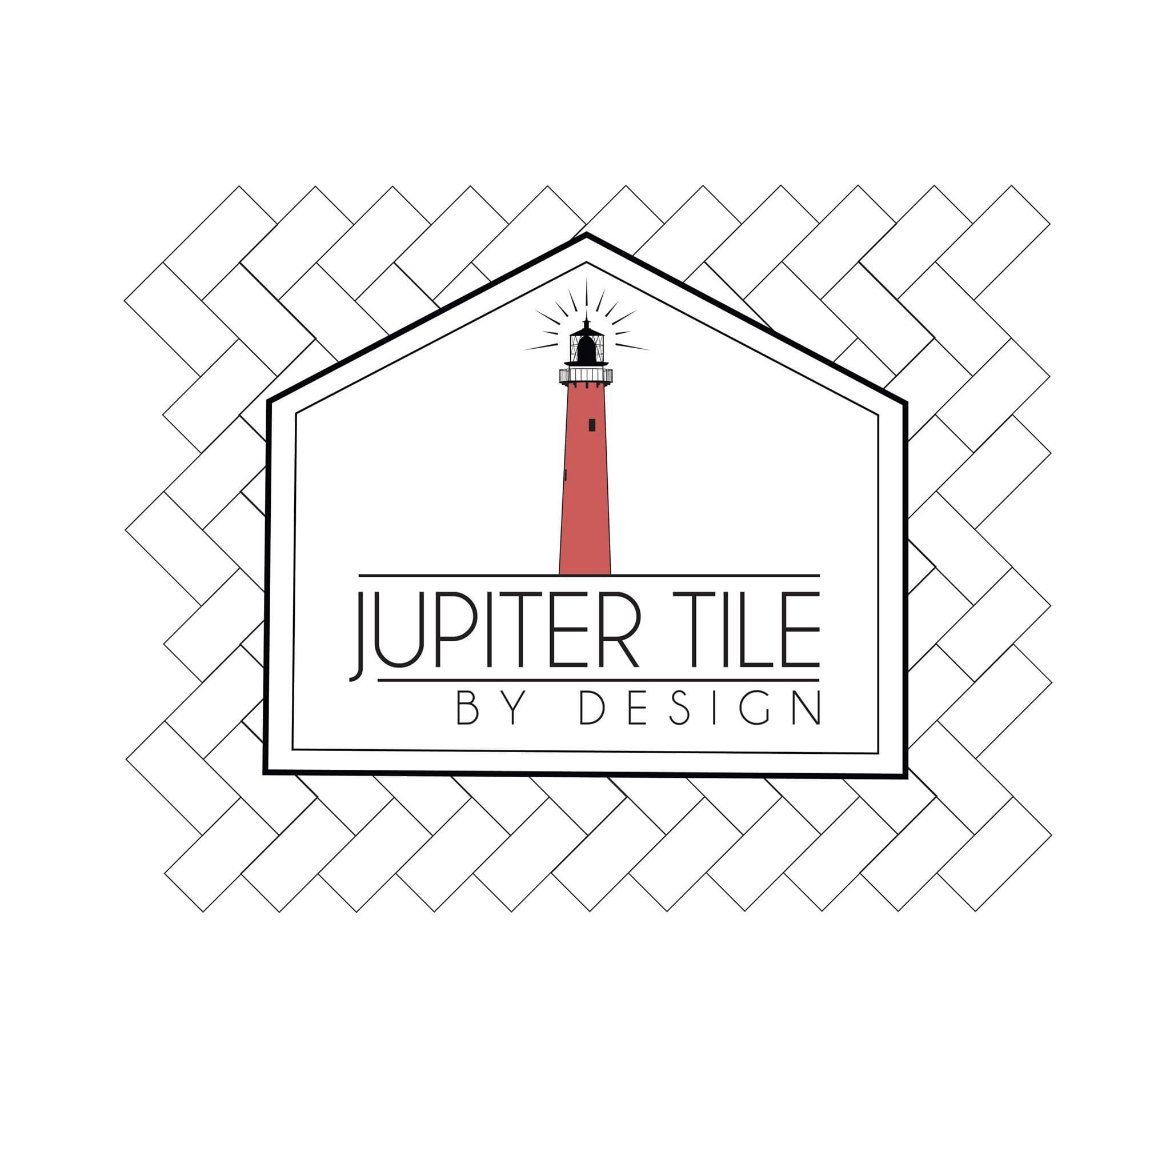 Jupitertilebydesign